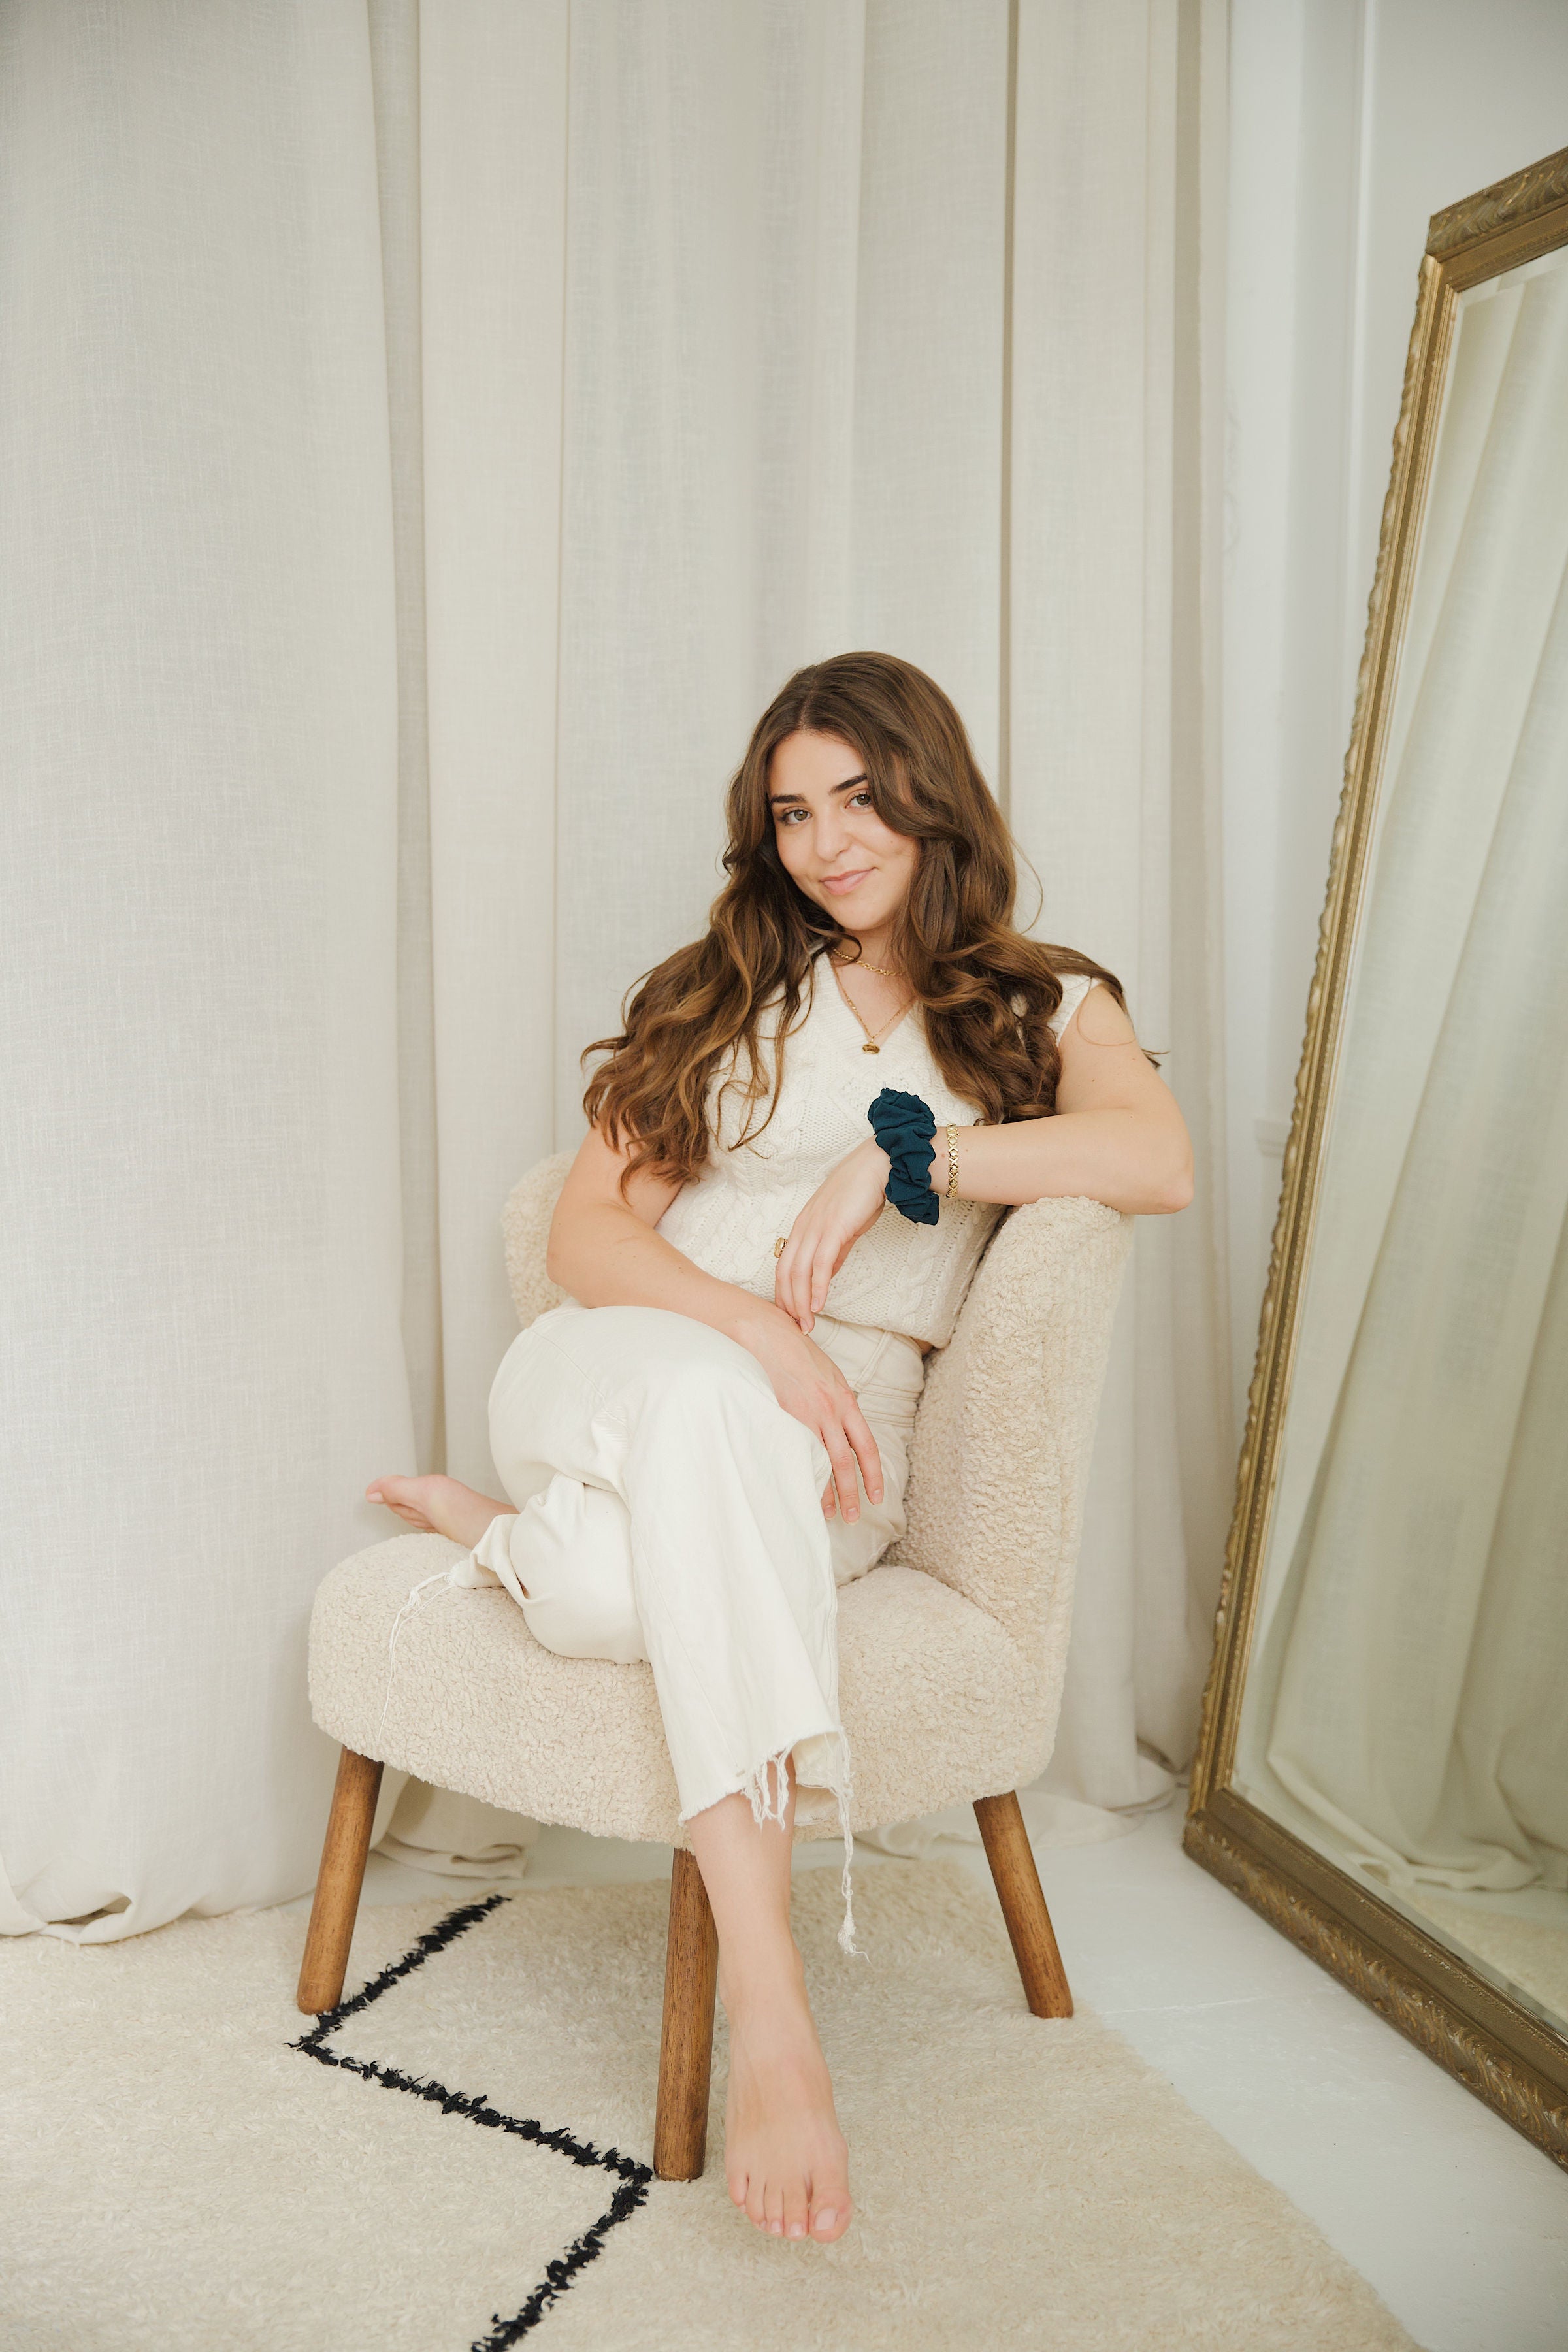 Petrol Blue scrunchie in classic size on model's wrist. Model is sitting crossed legged on a beige chair beside an oversized gold mirror